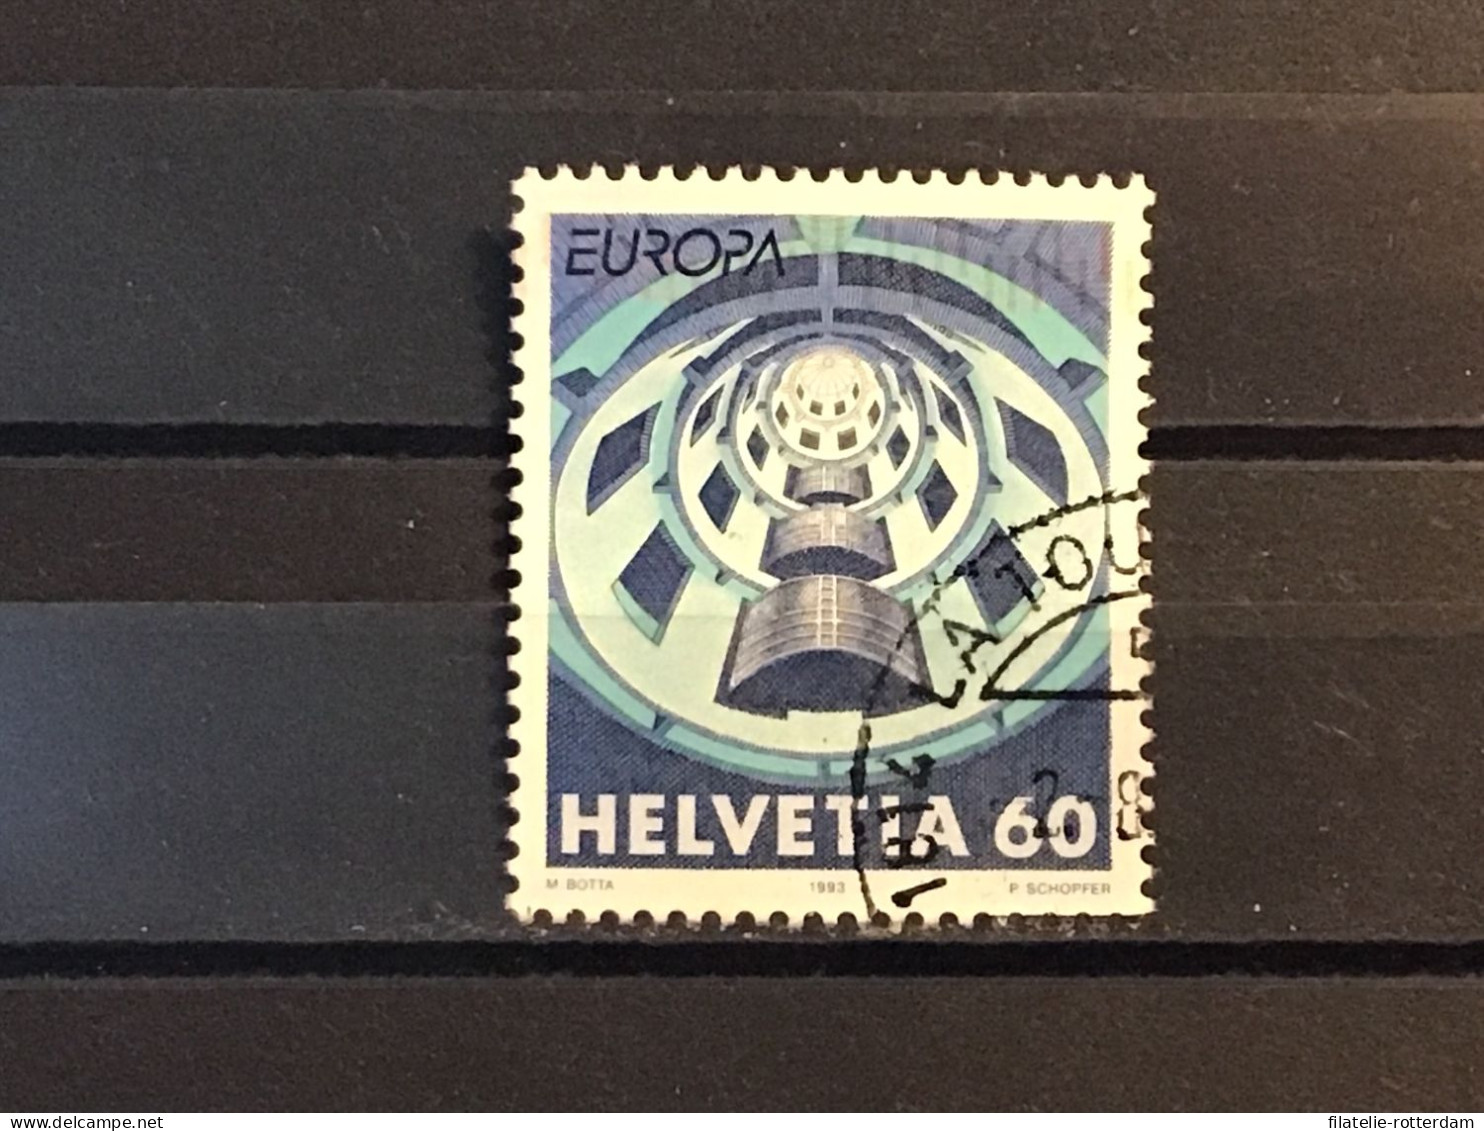 Switzerland / Zwitserland - Europa, Astronomy (60) 1993 - Used Stamps